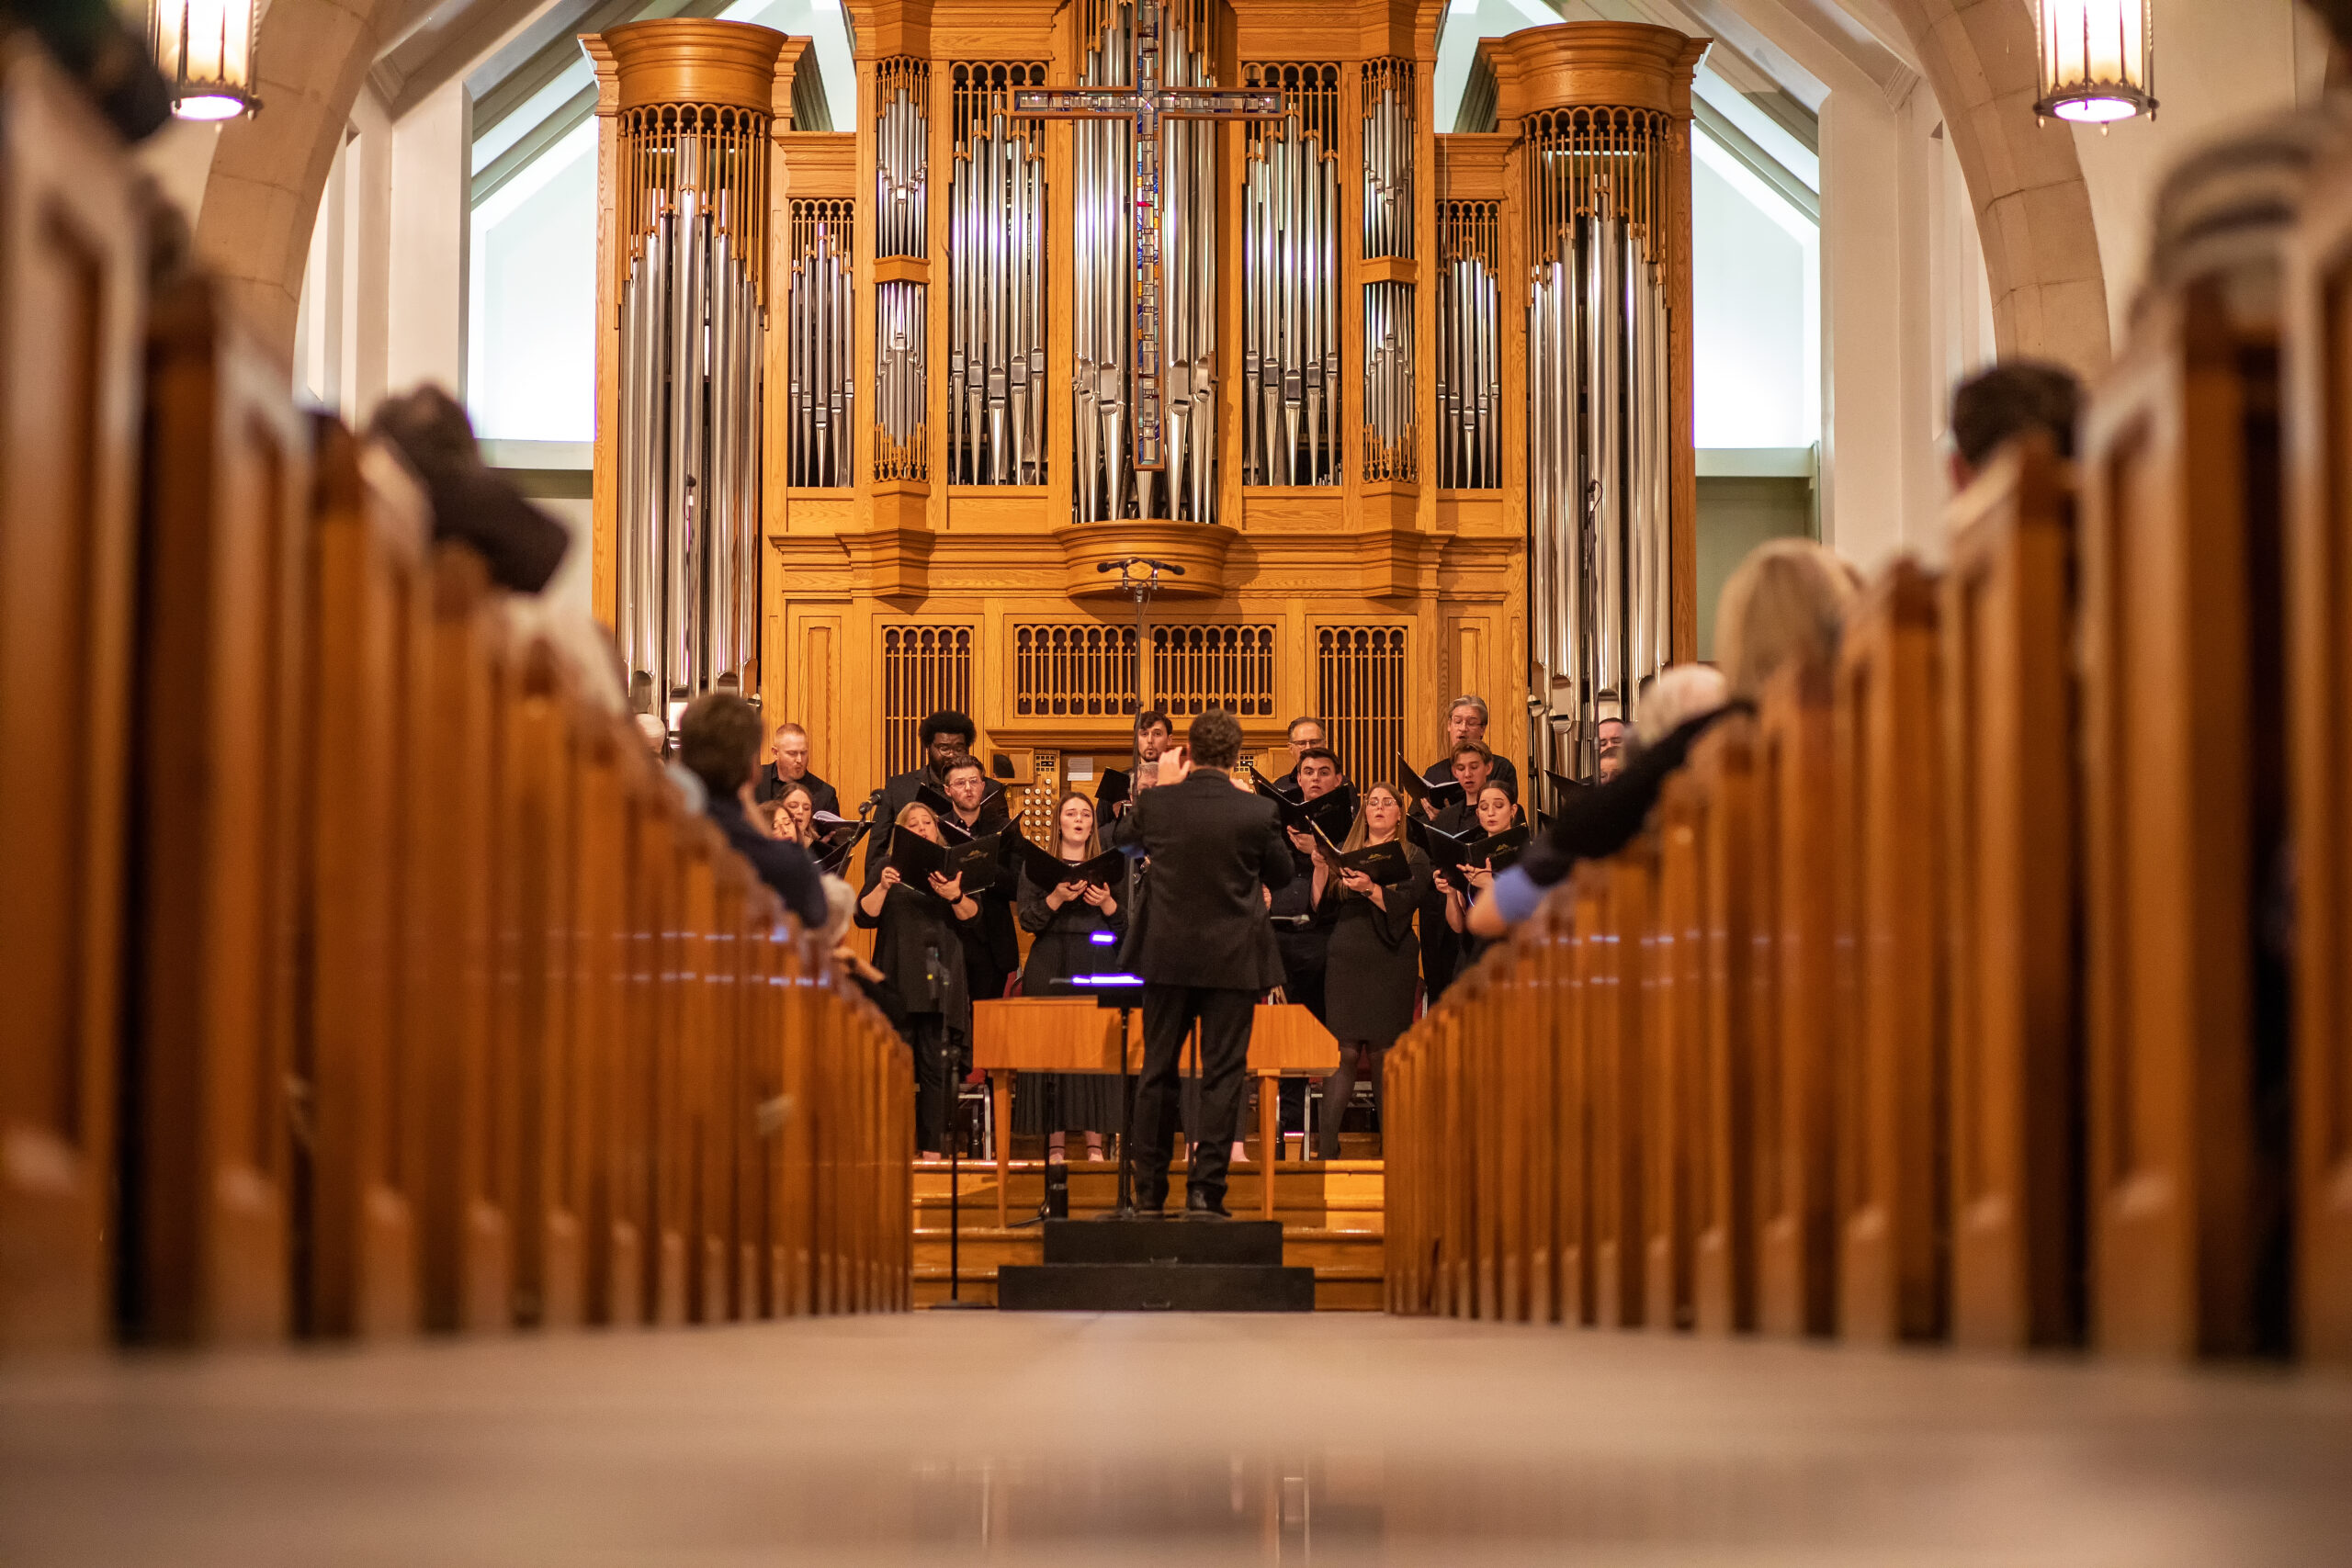 ChoralSong – A Colorado Springs Music Group